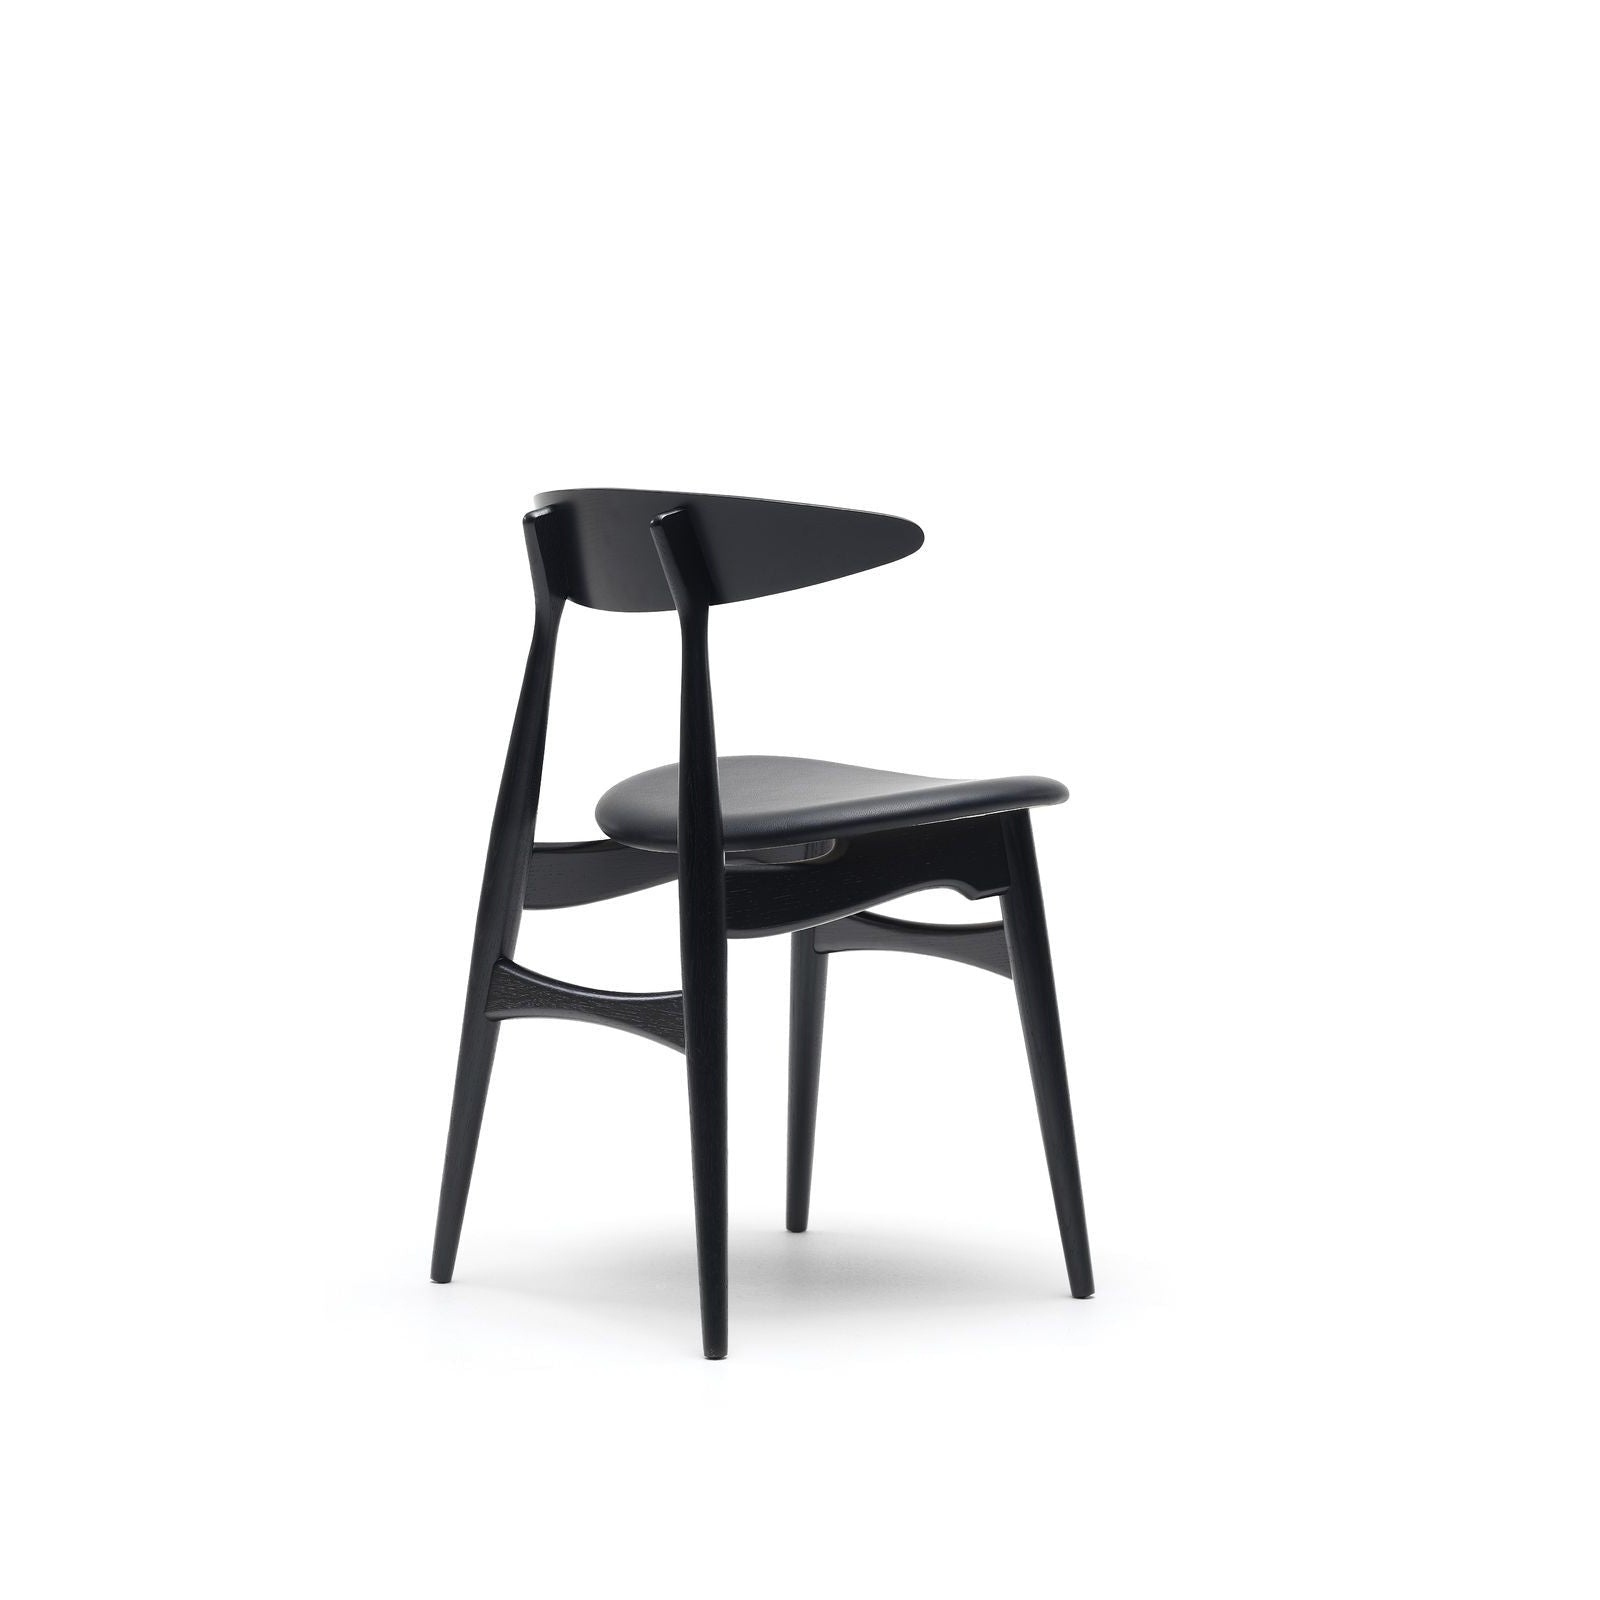 Carl Hansen CH33 P stoel, zwart eiken/zwart leer